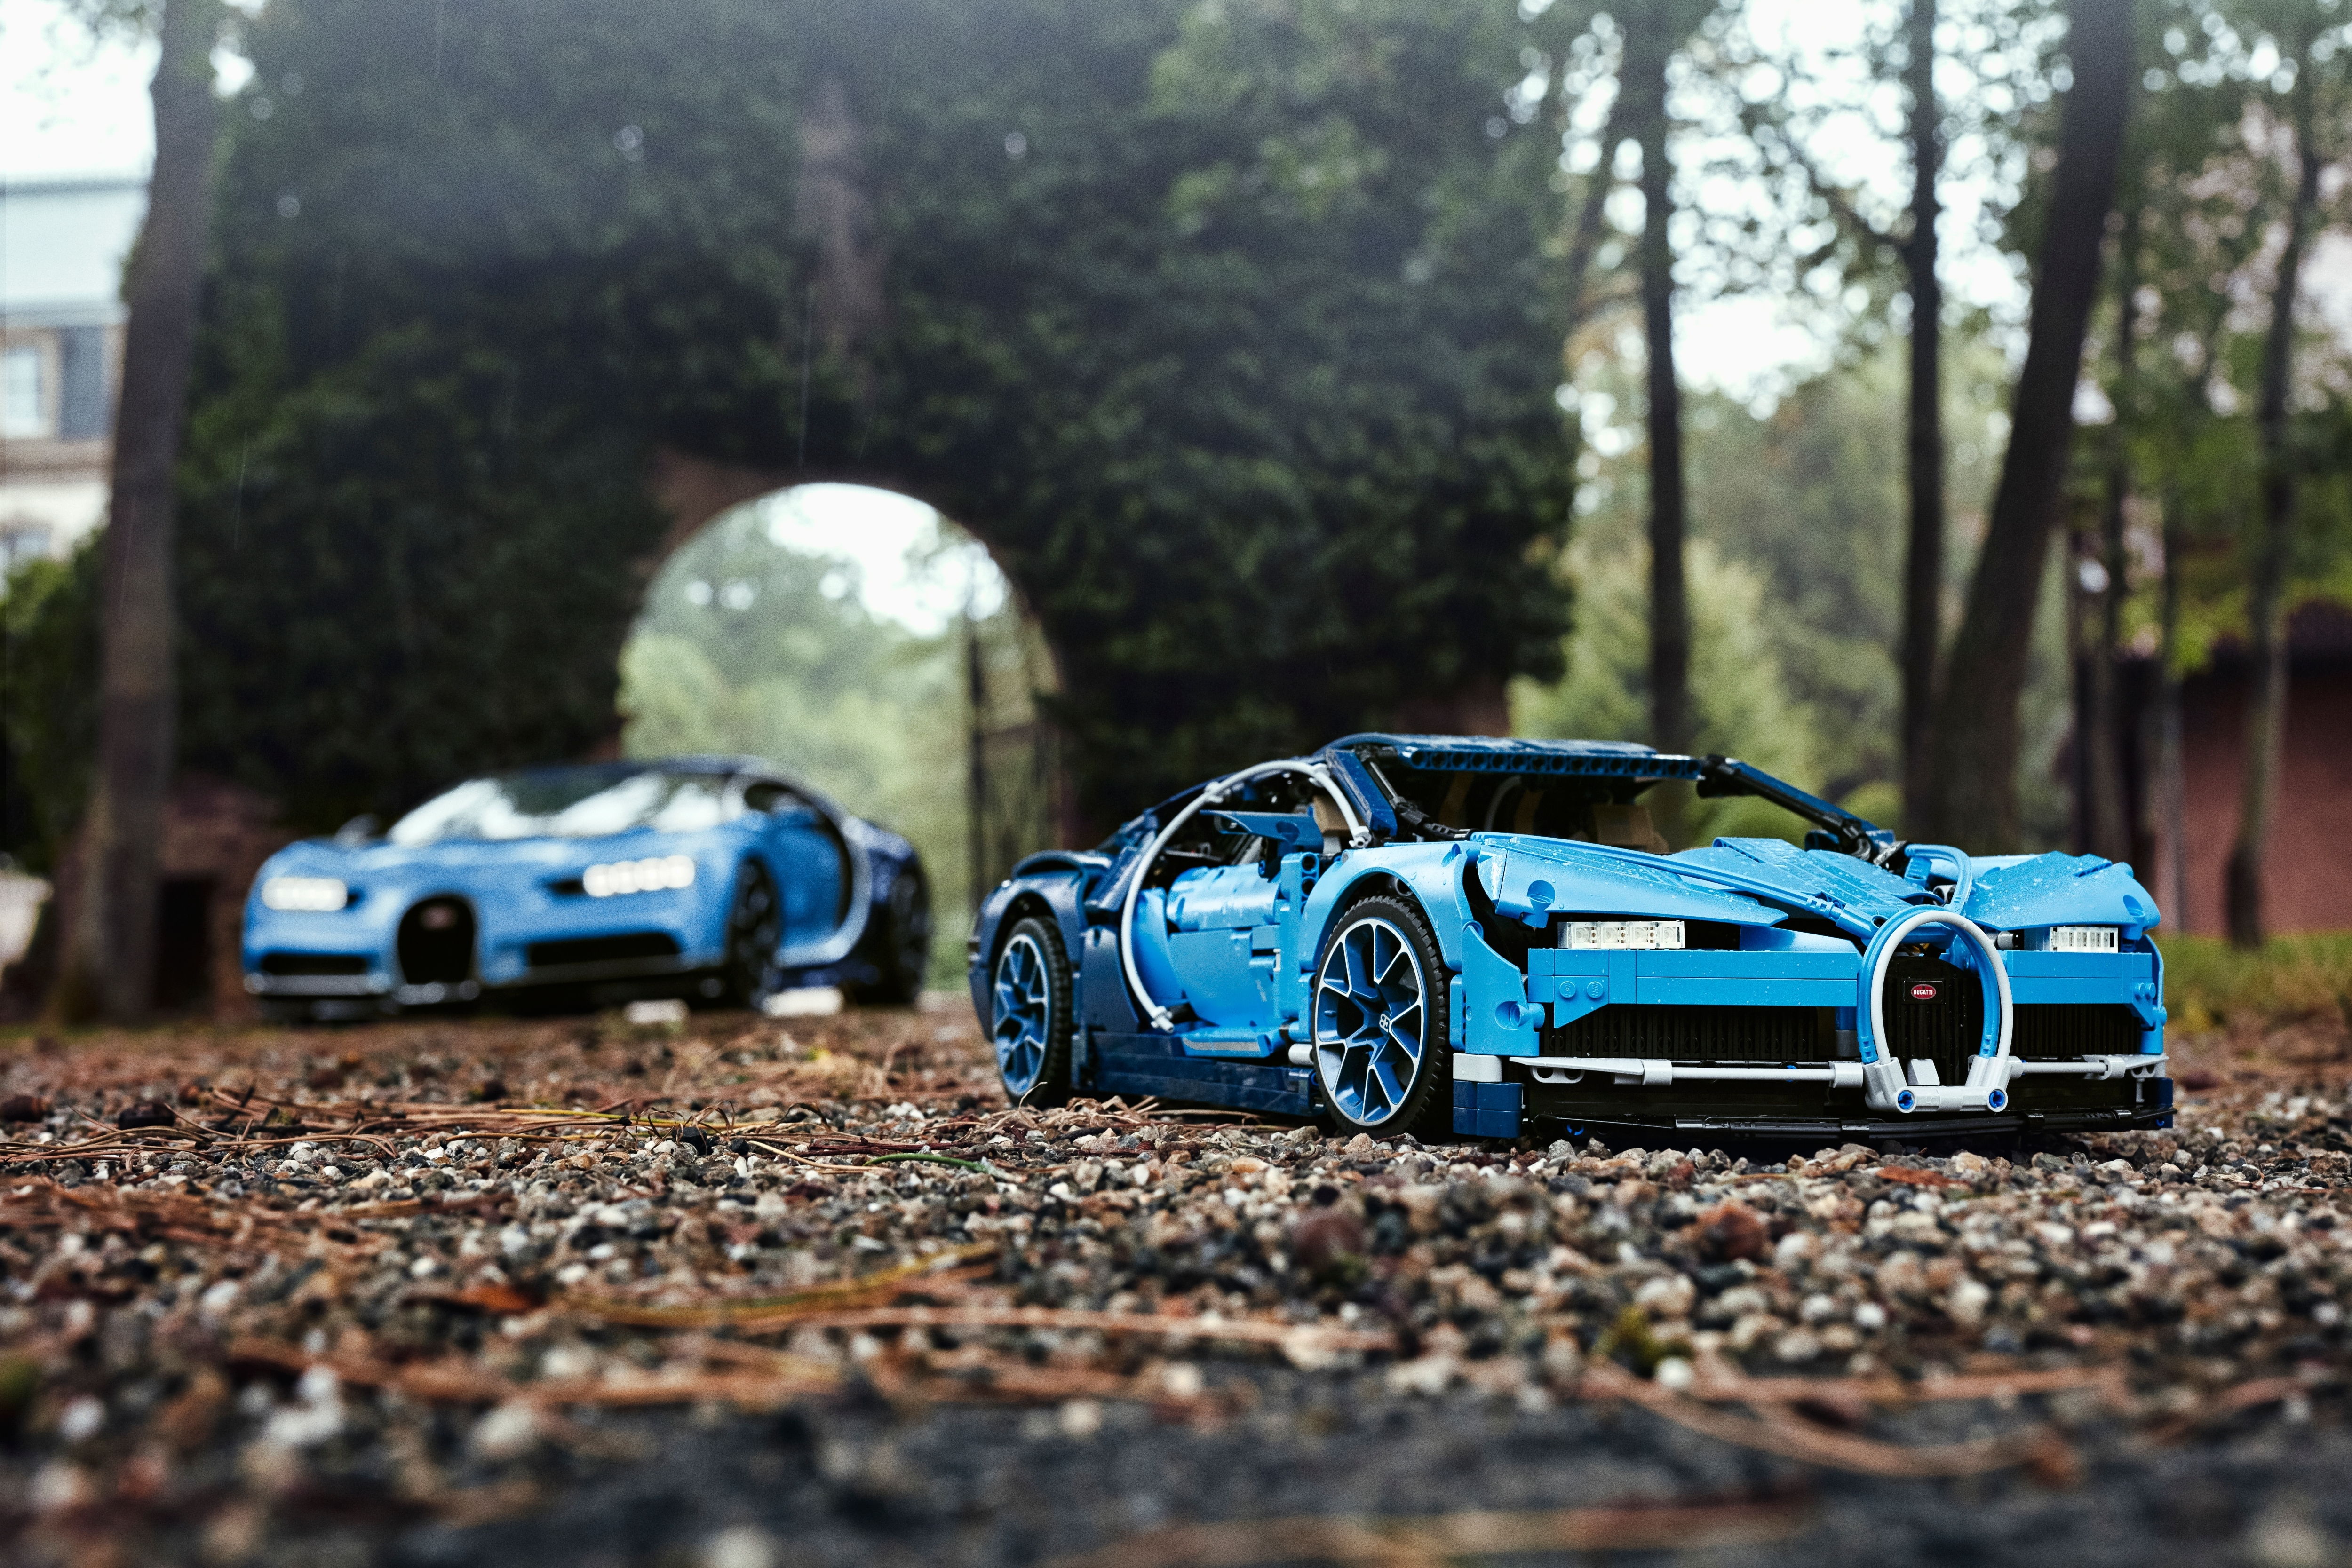 LEGO Technic Bugatti Chiron 42083 Race Car Building Kit and